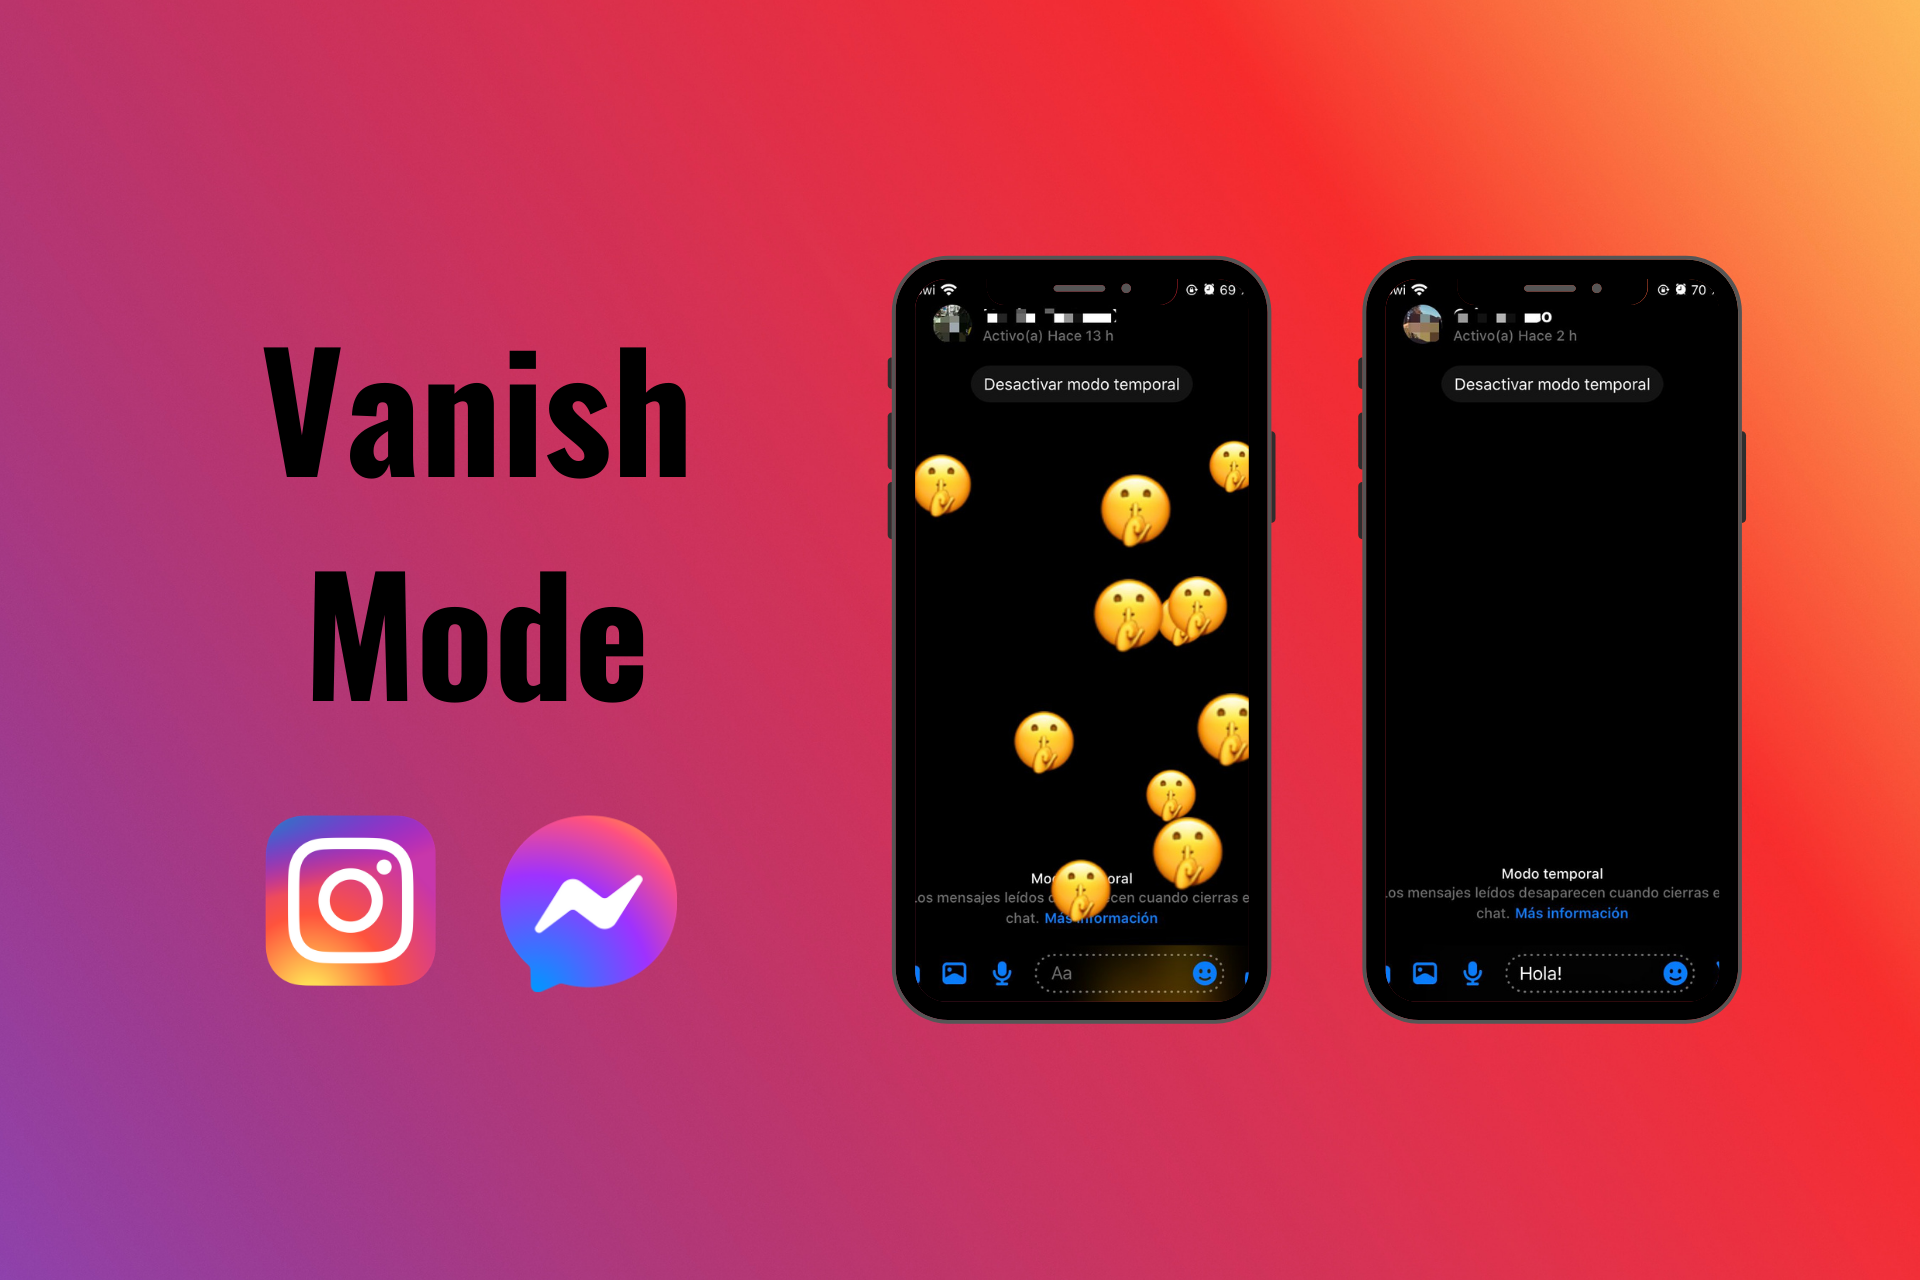 What Is Vanish Mode on Instagram?